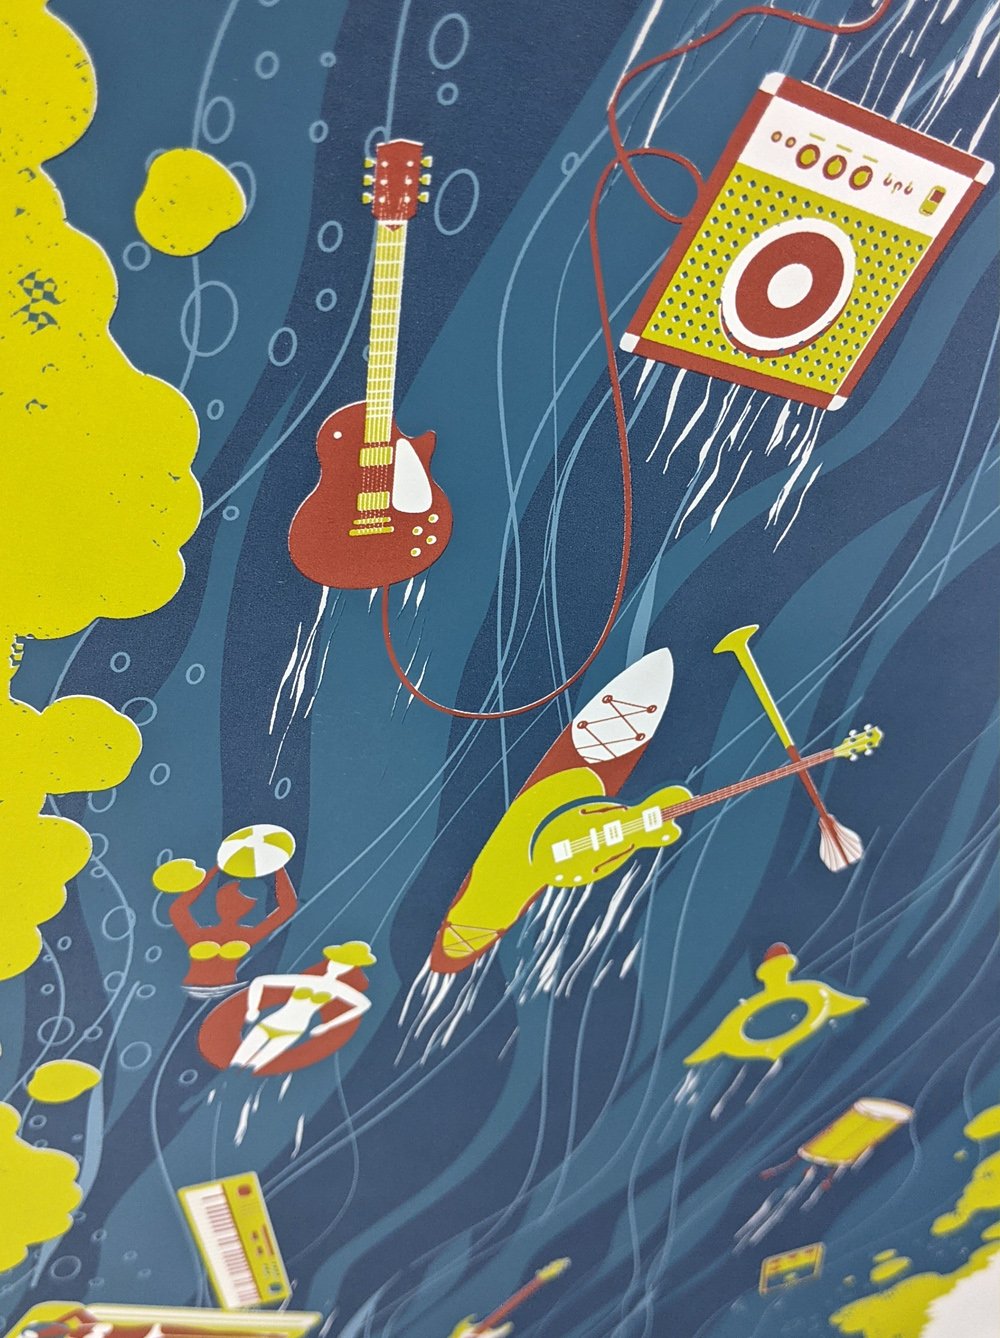 Wilco & Sleater Kinney, Asheville, NC "Float the River" poster